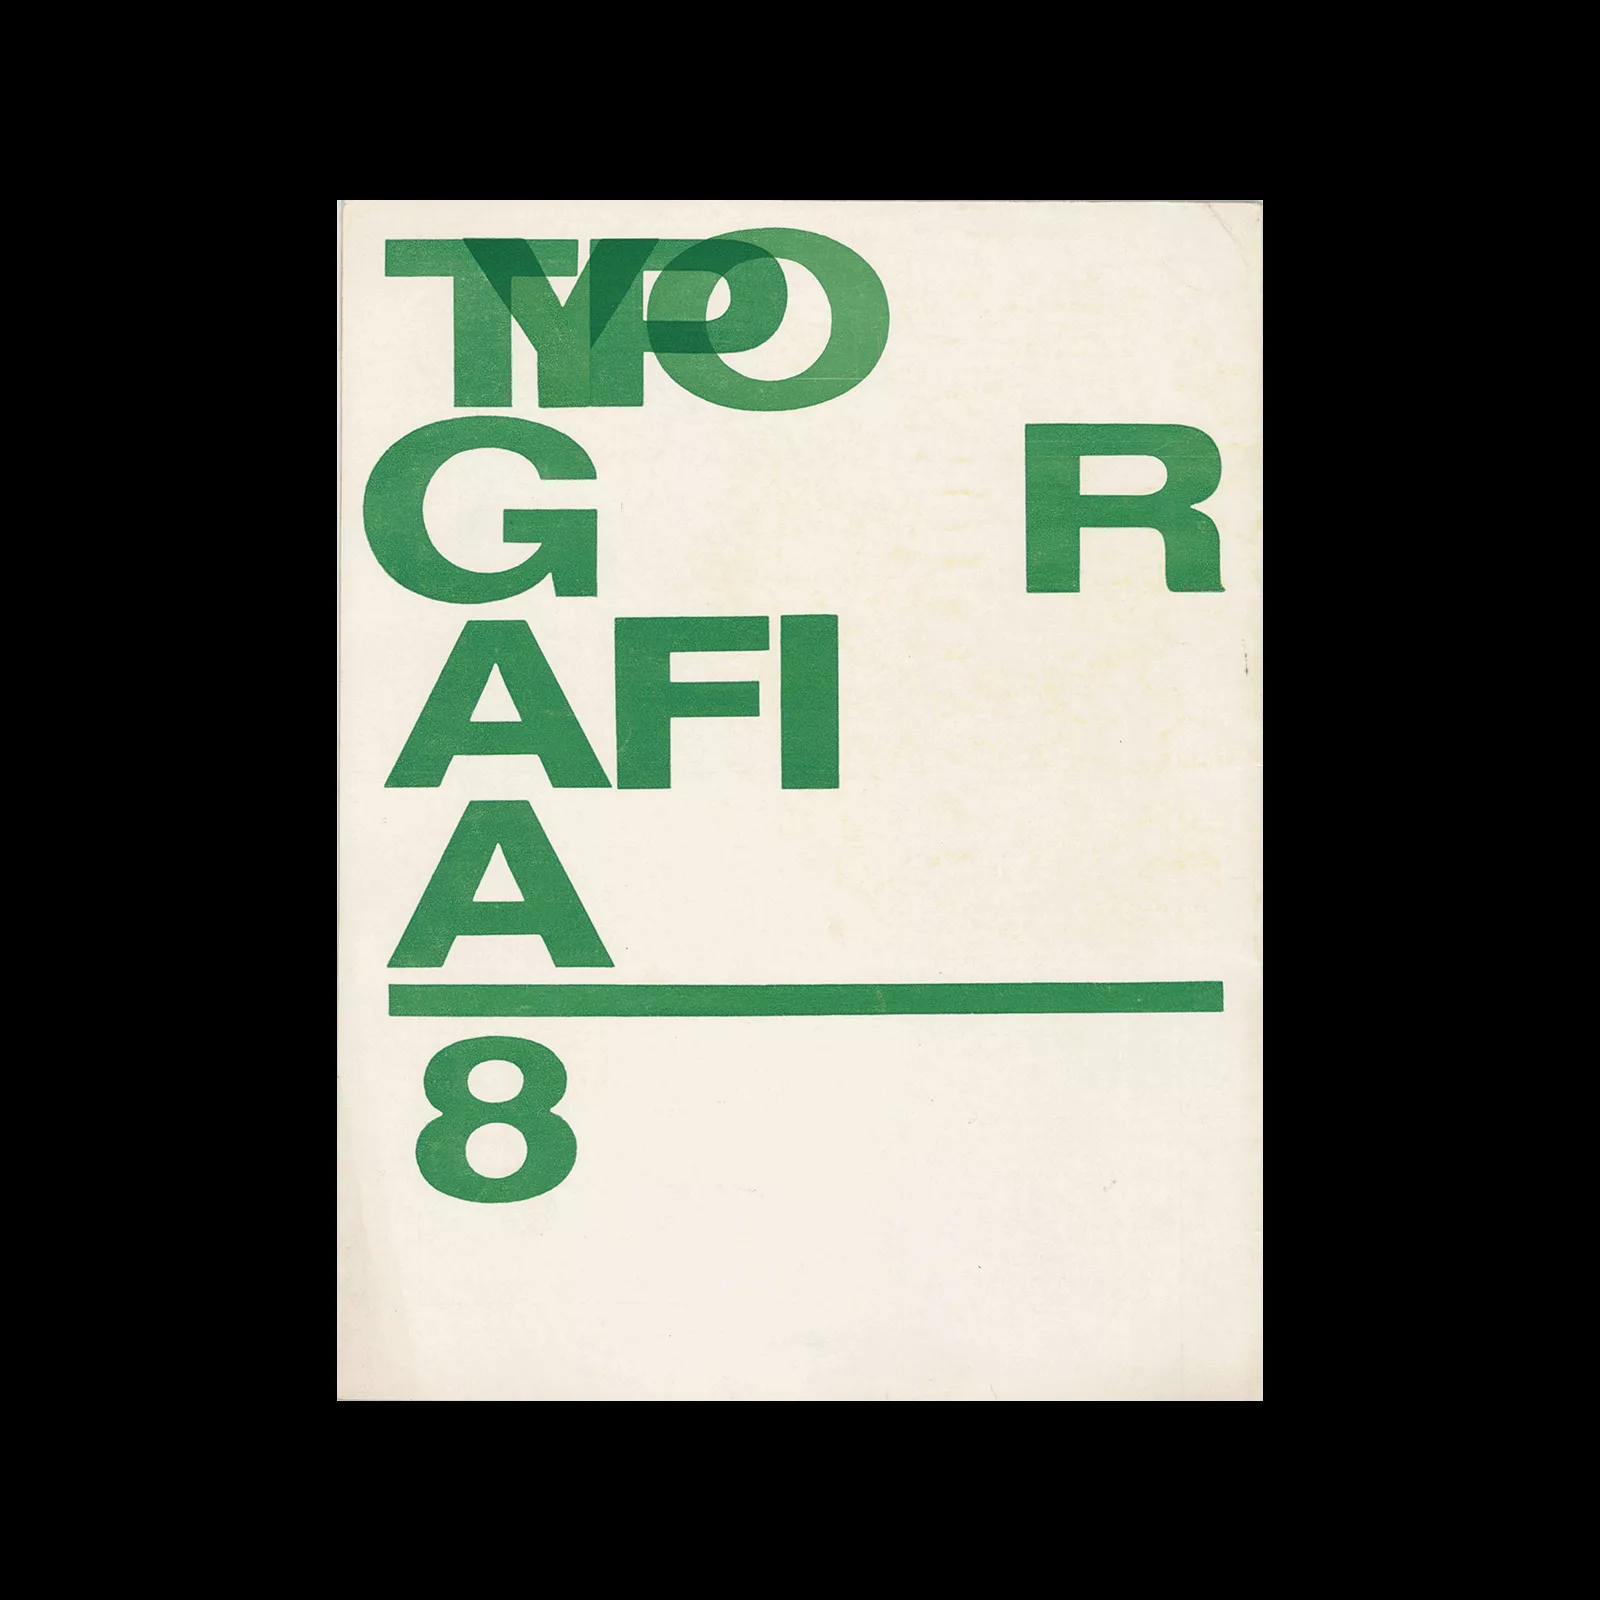 Typografia, ročník 67, 08, 1964. Cover design by Oldřich Hlavsa